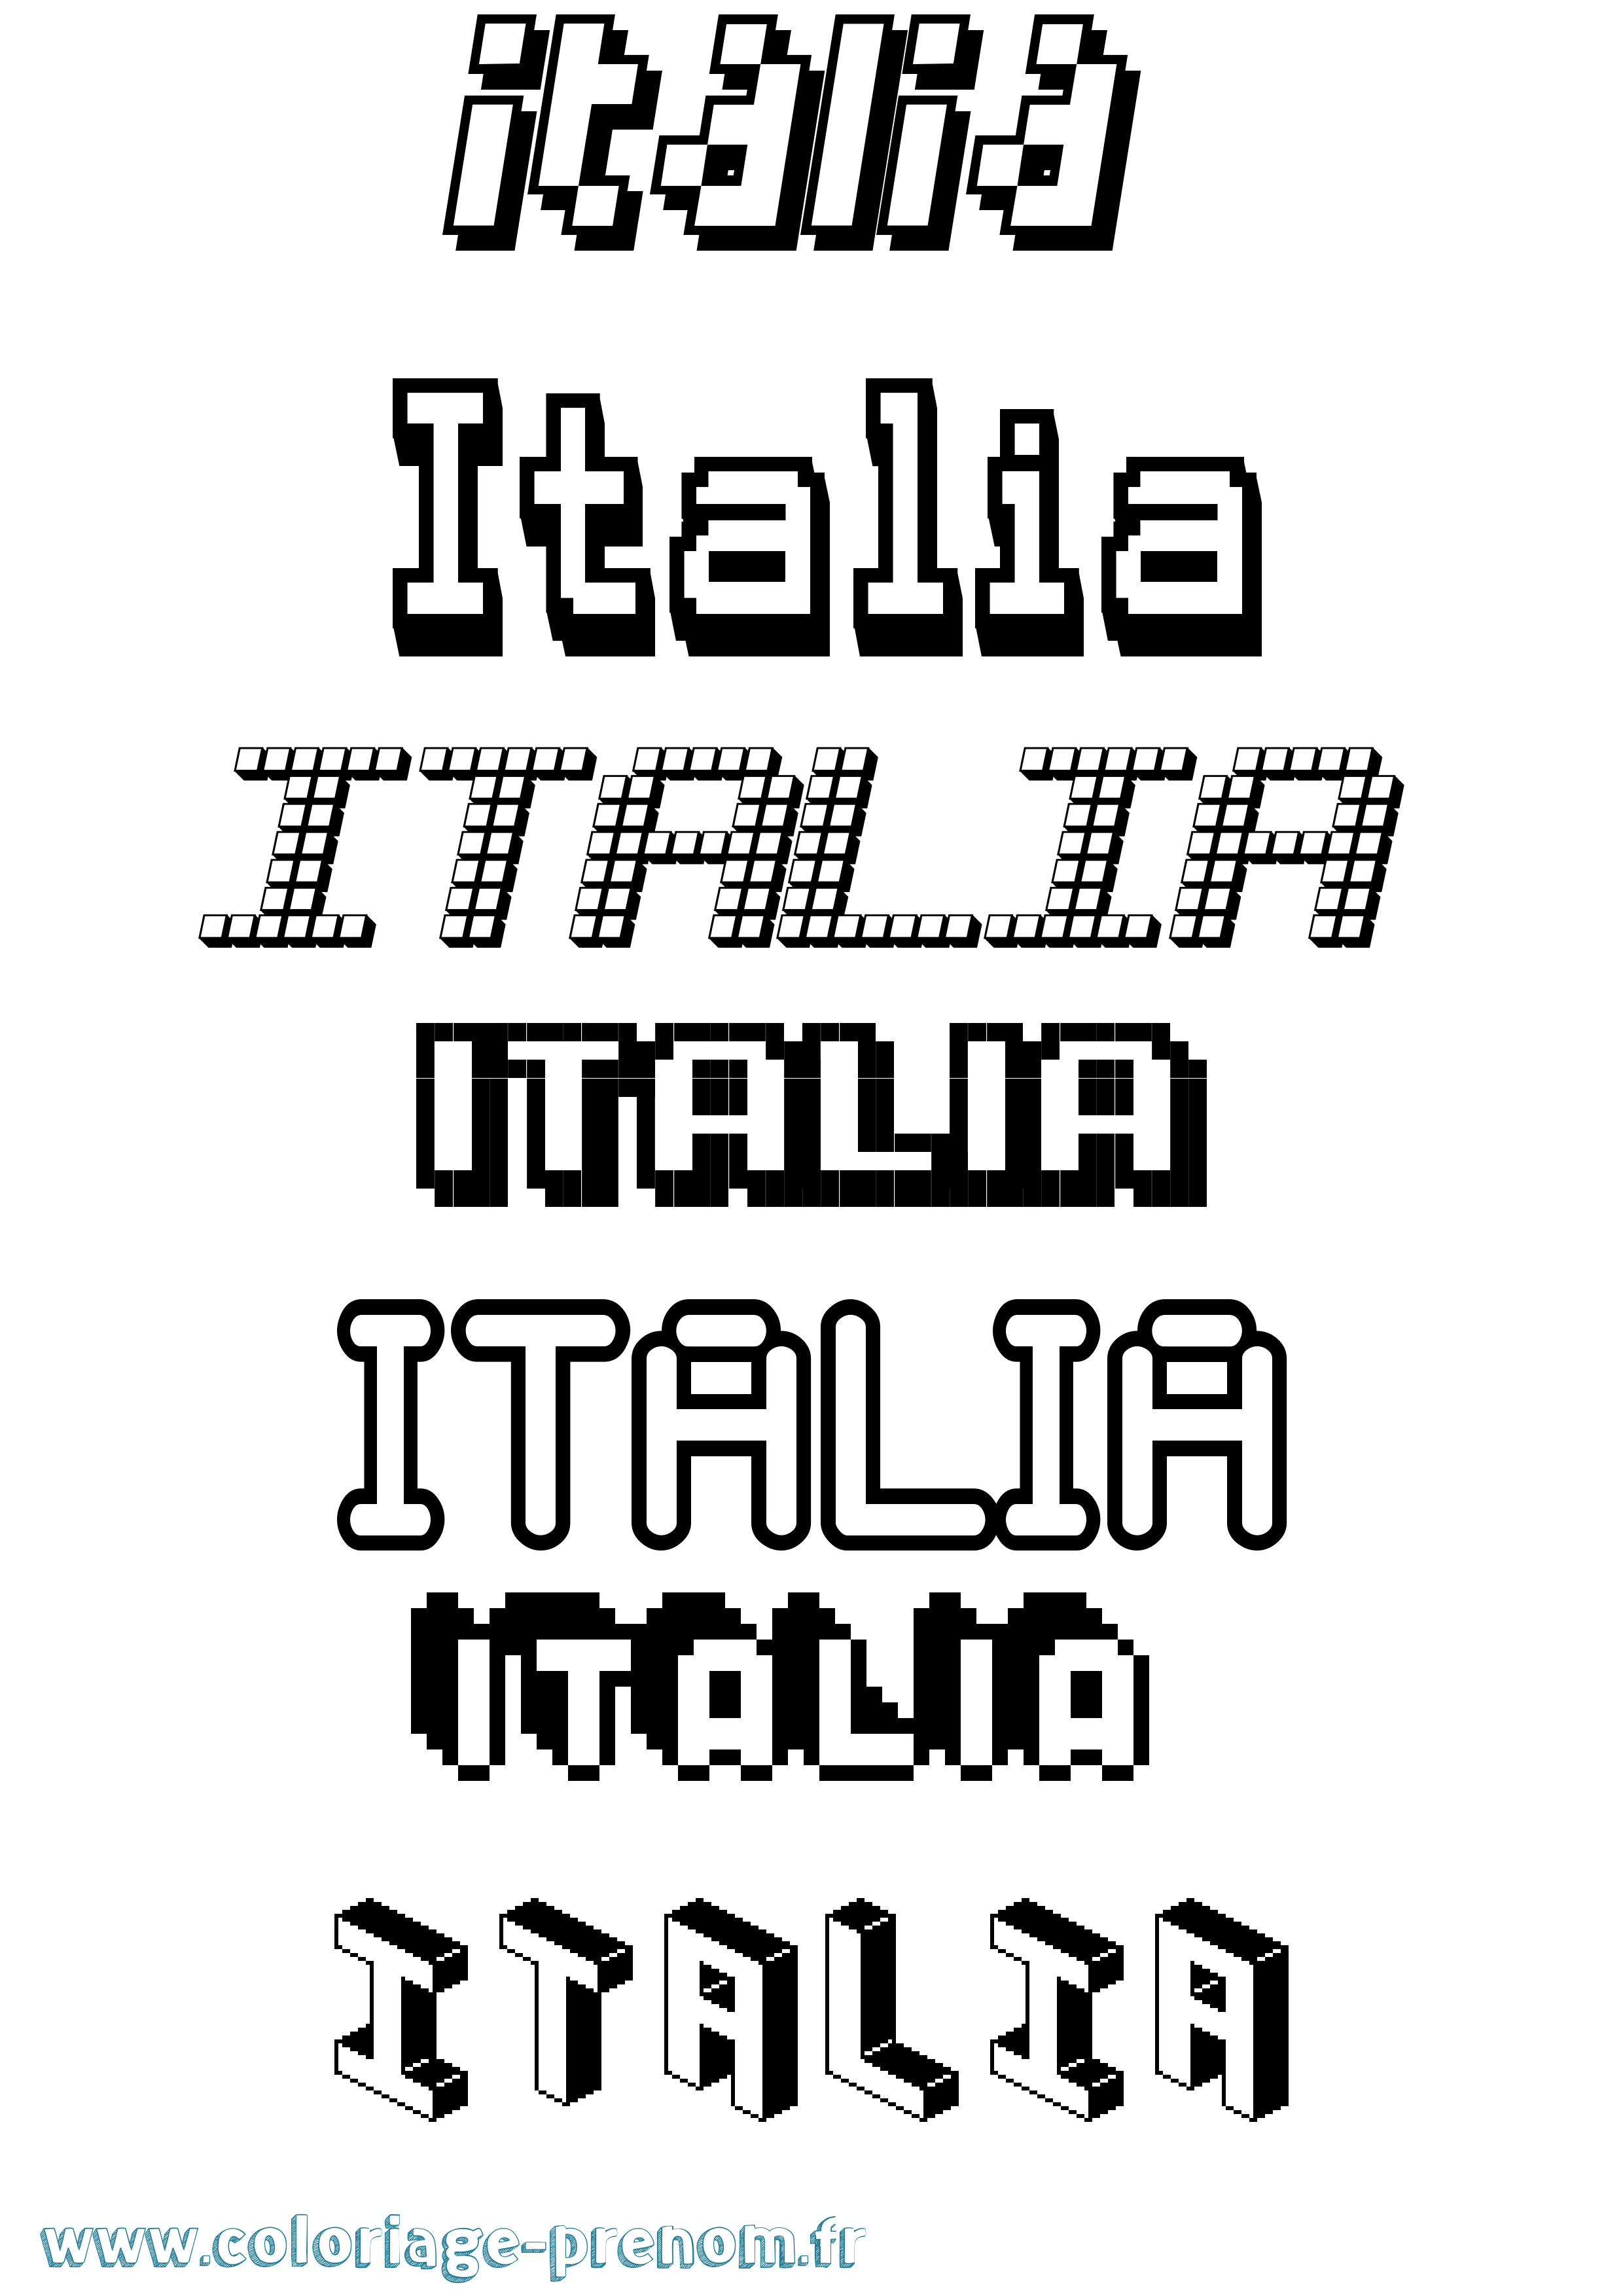 Coloriage prénom Italia Pixel